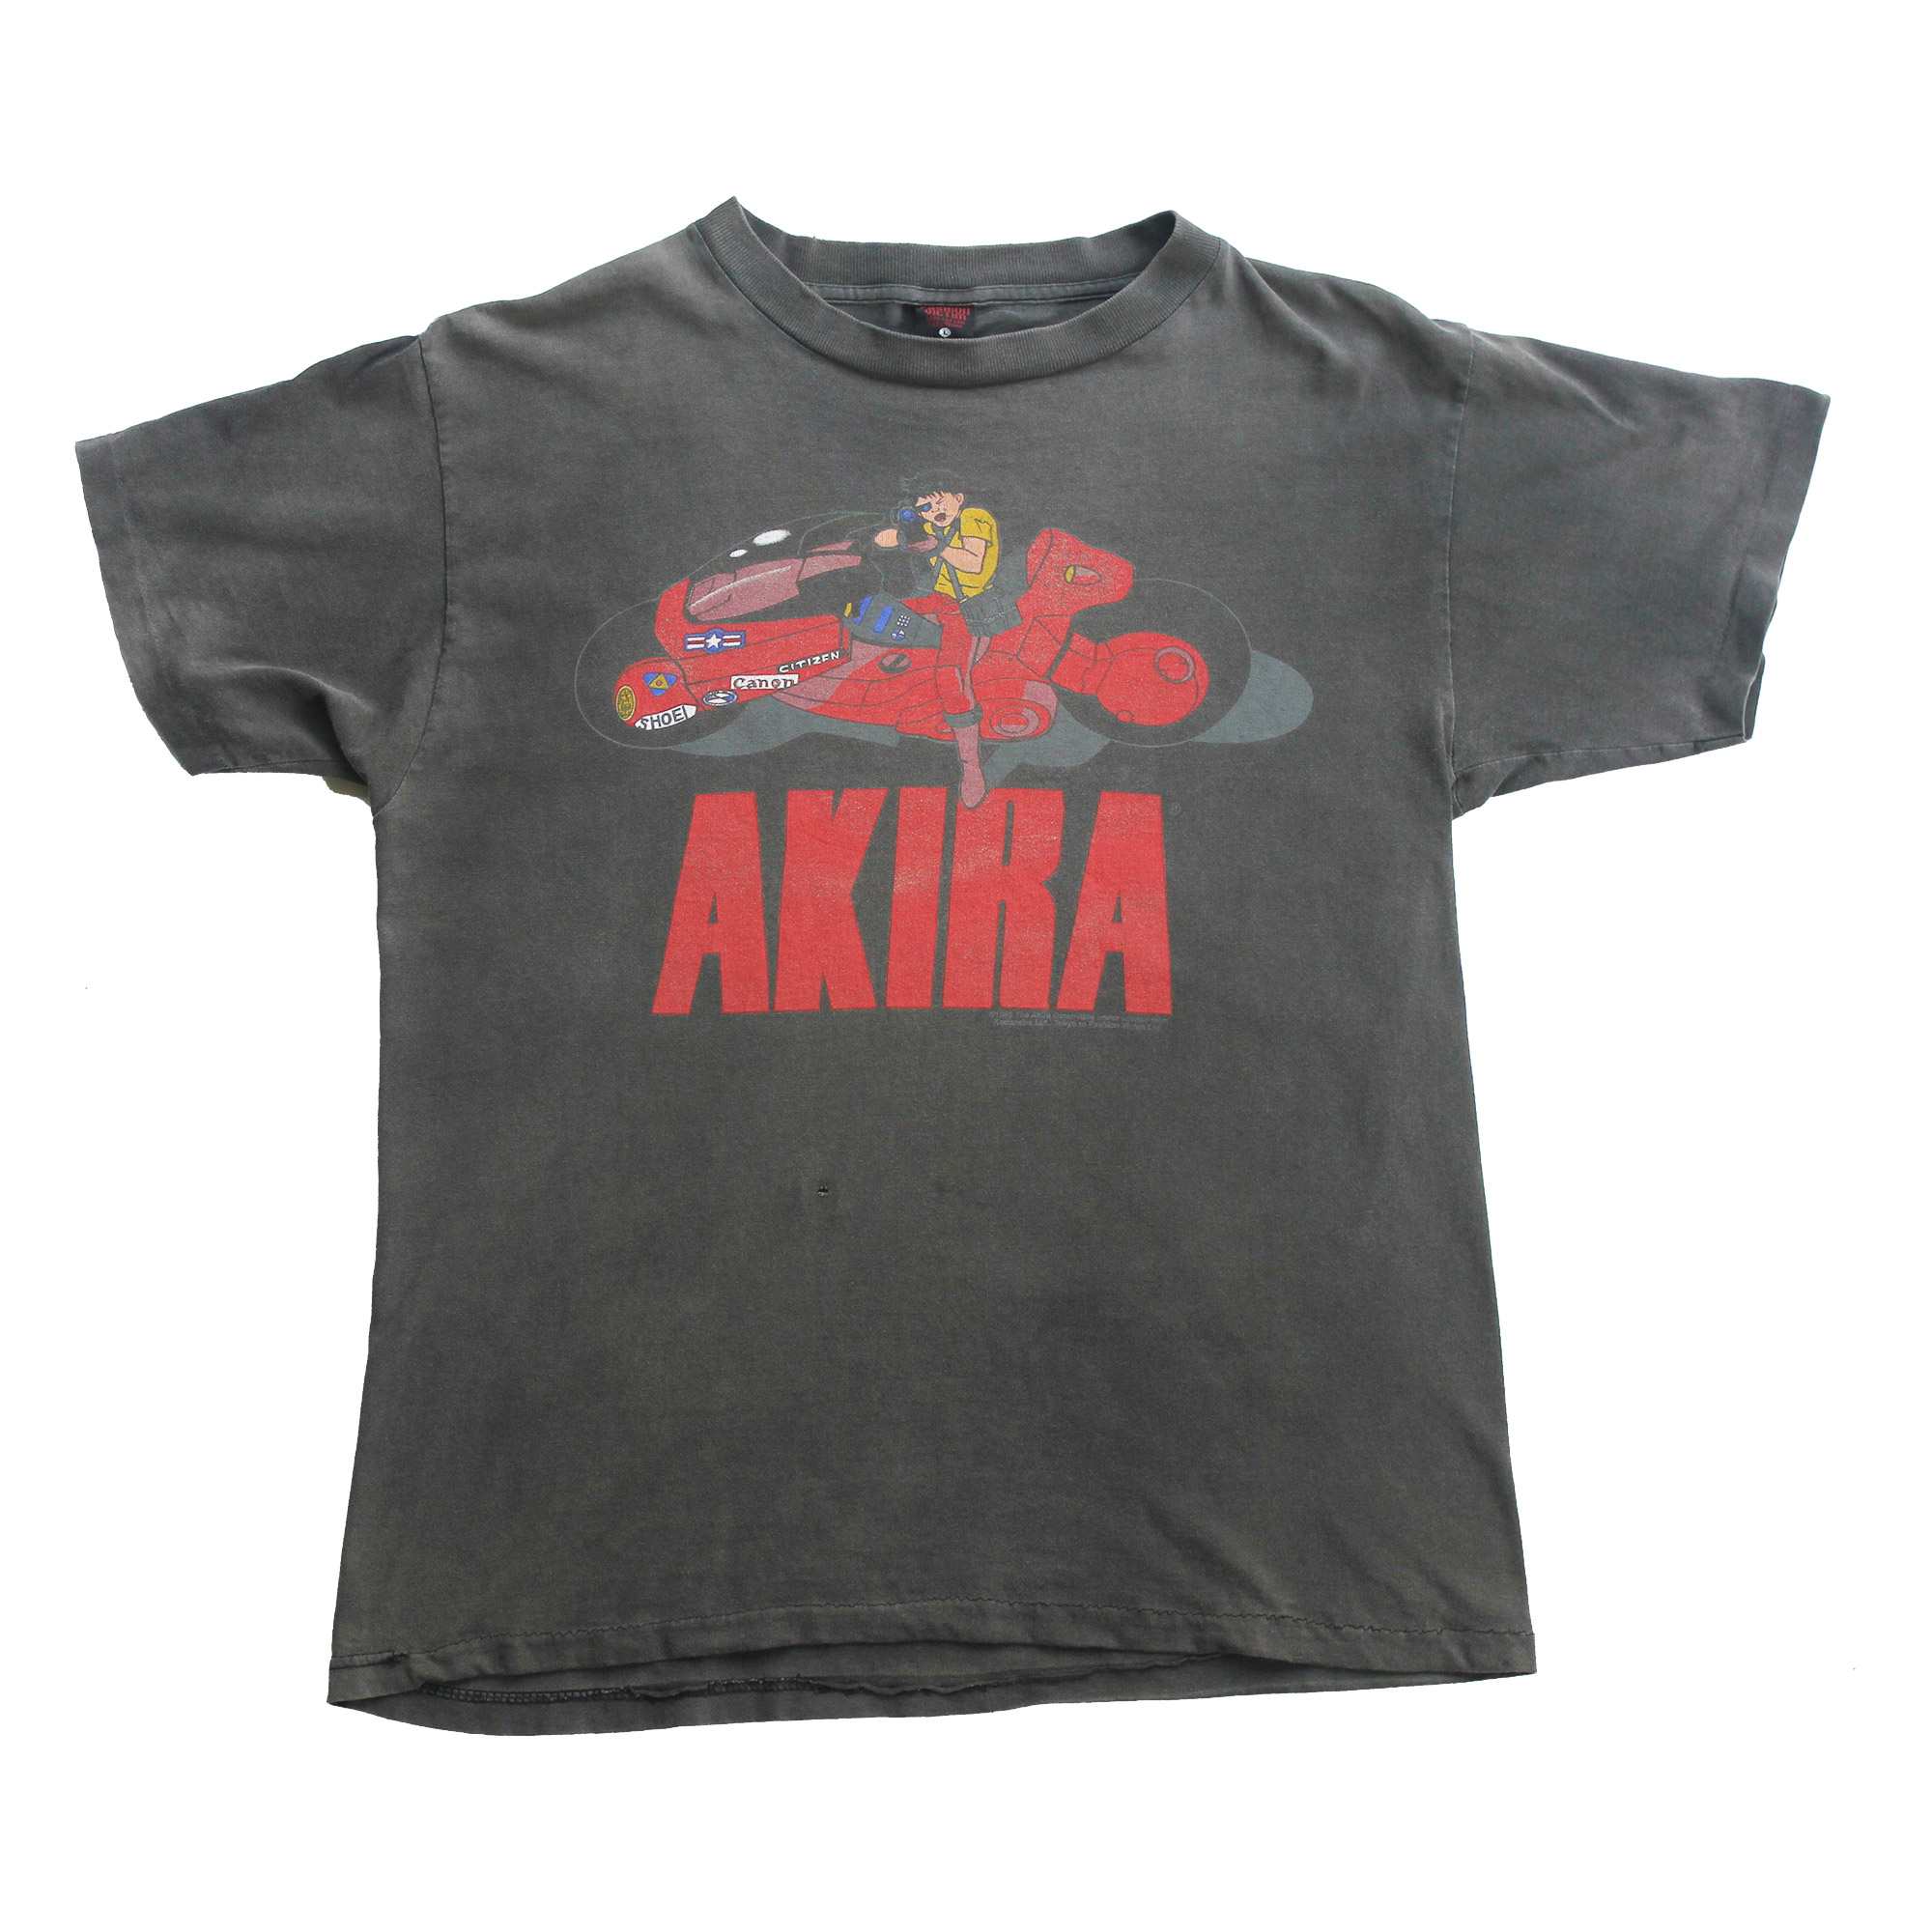 Vintage Akira T-shirt, Size M | Black Shirts World